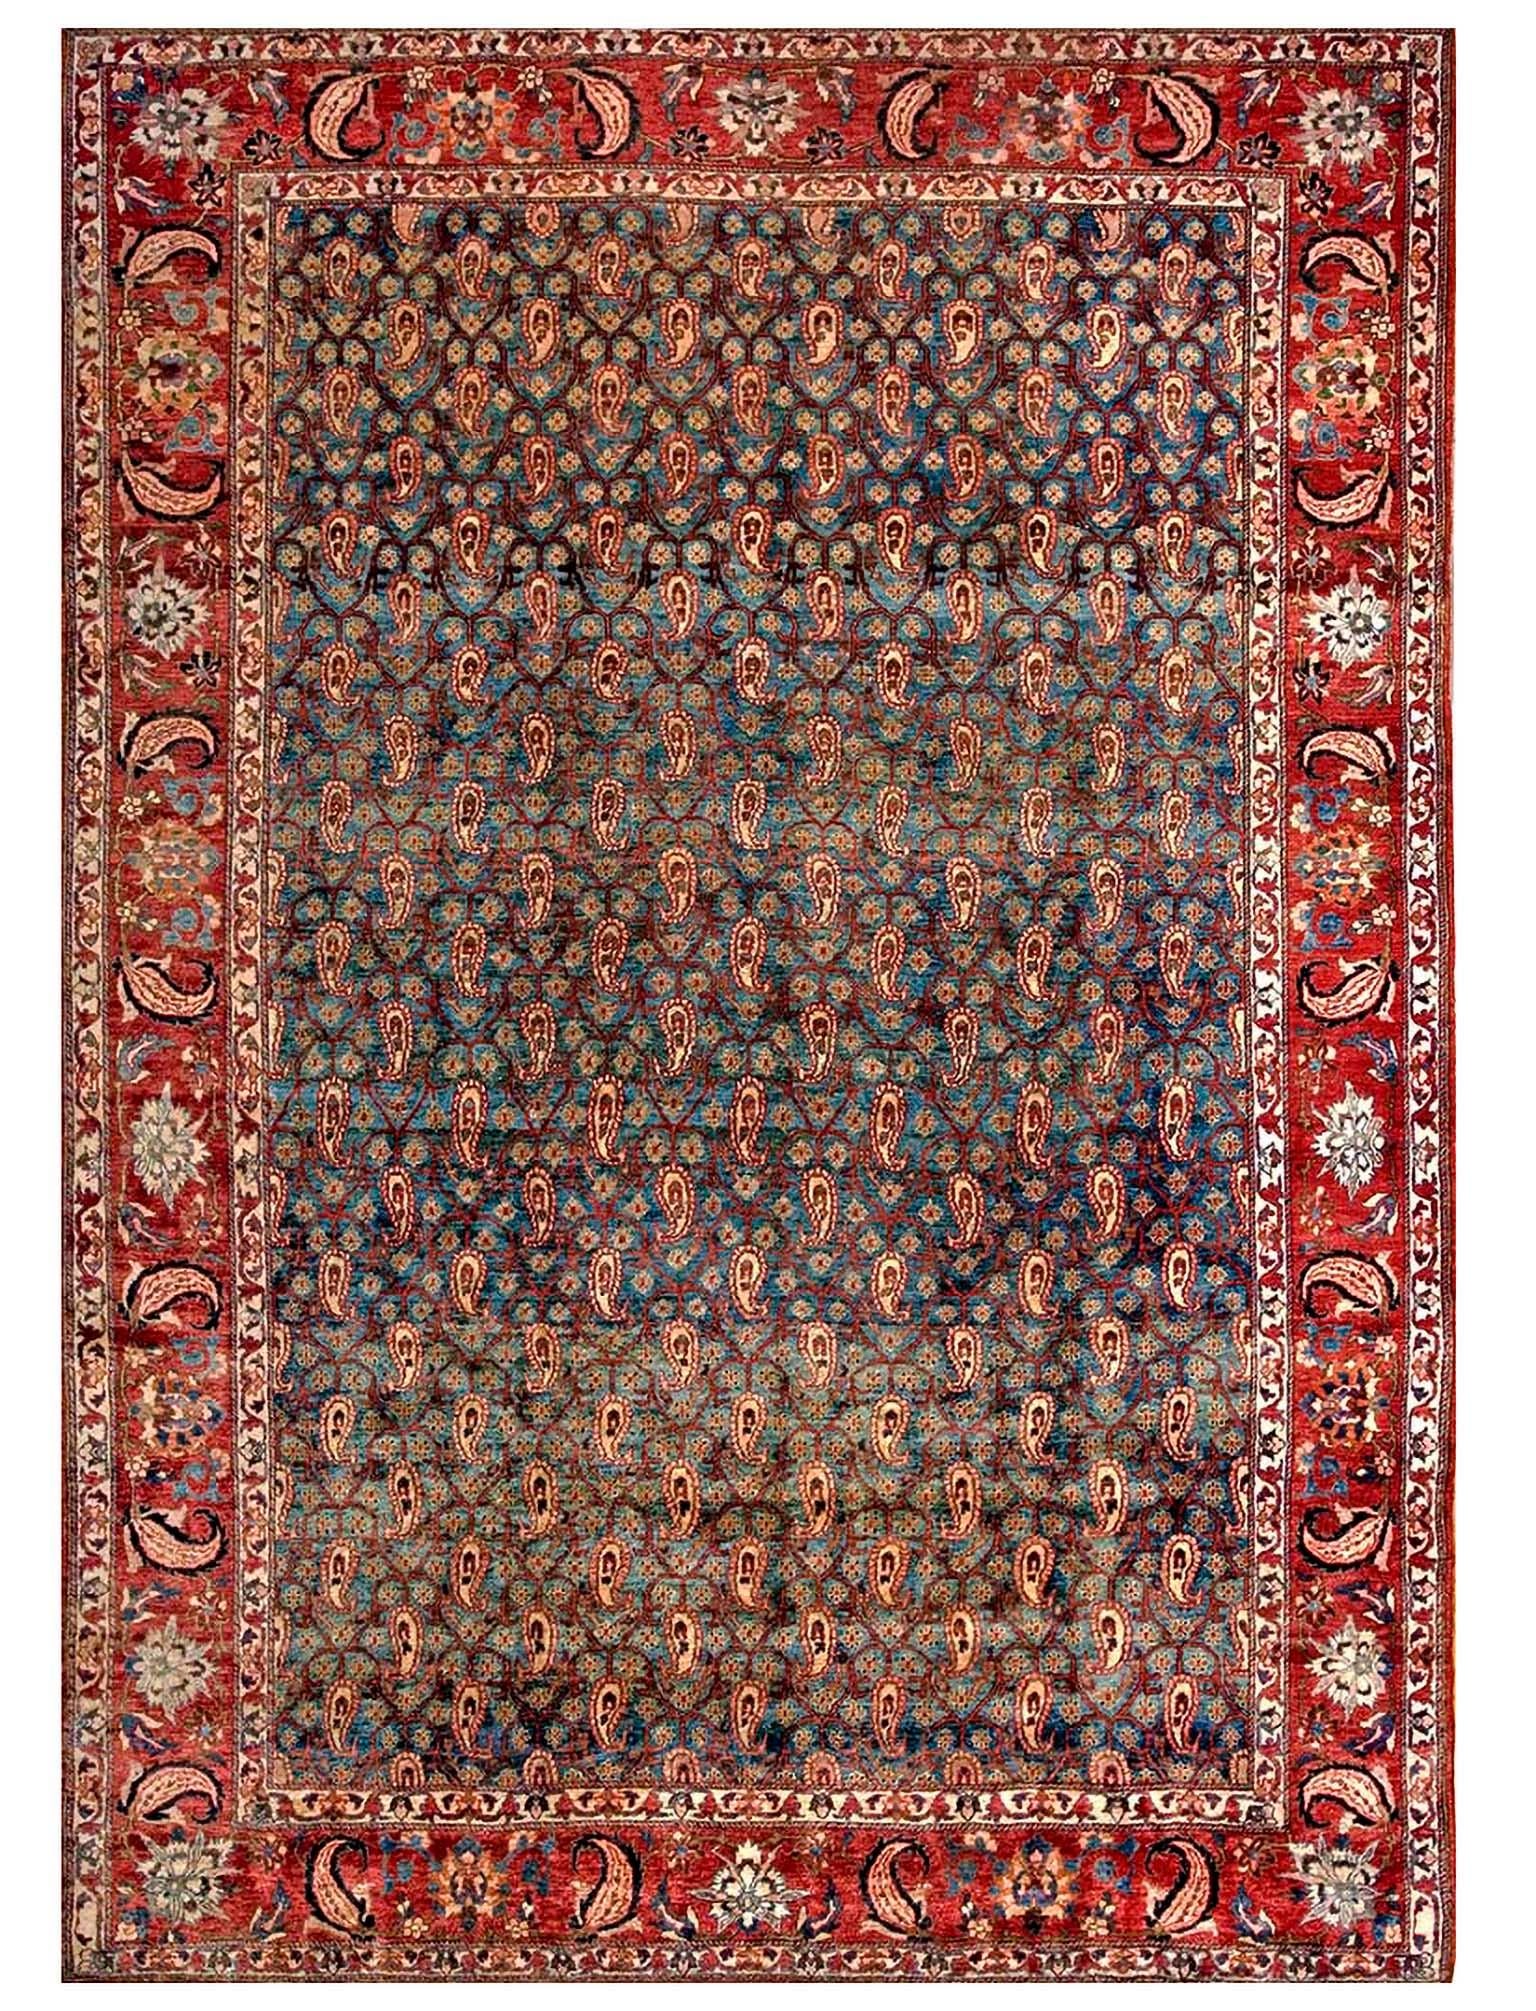 1930s Persian Bakhtiari Paisley Carpet ( 8'8" x 12' - 264 x 365 ) For Sale